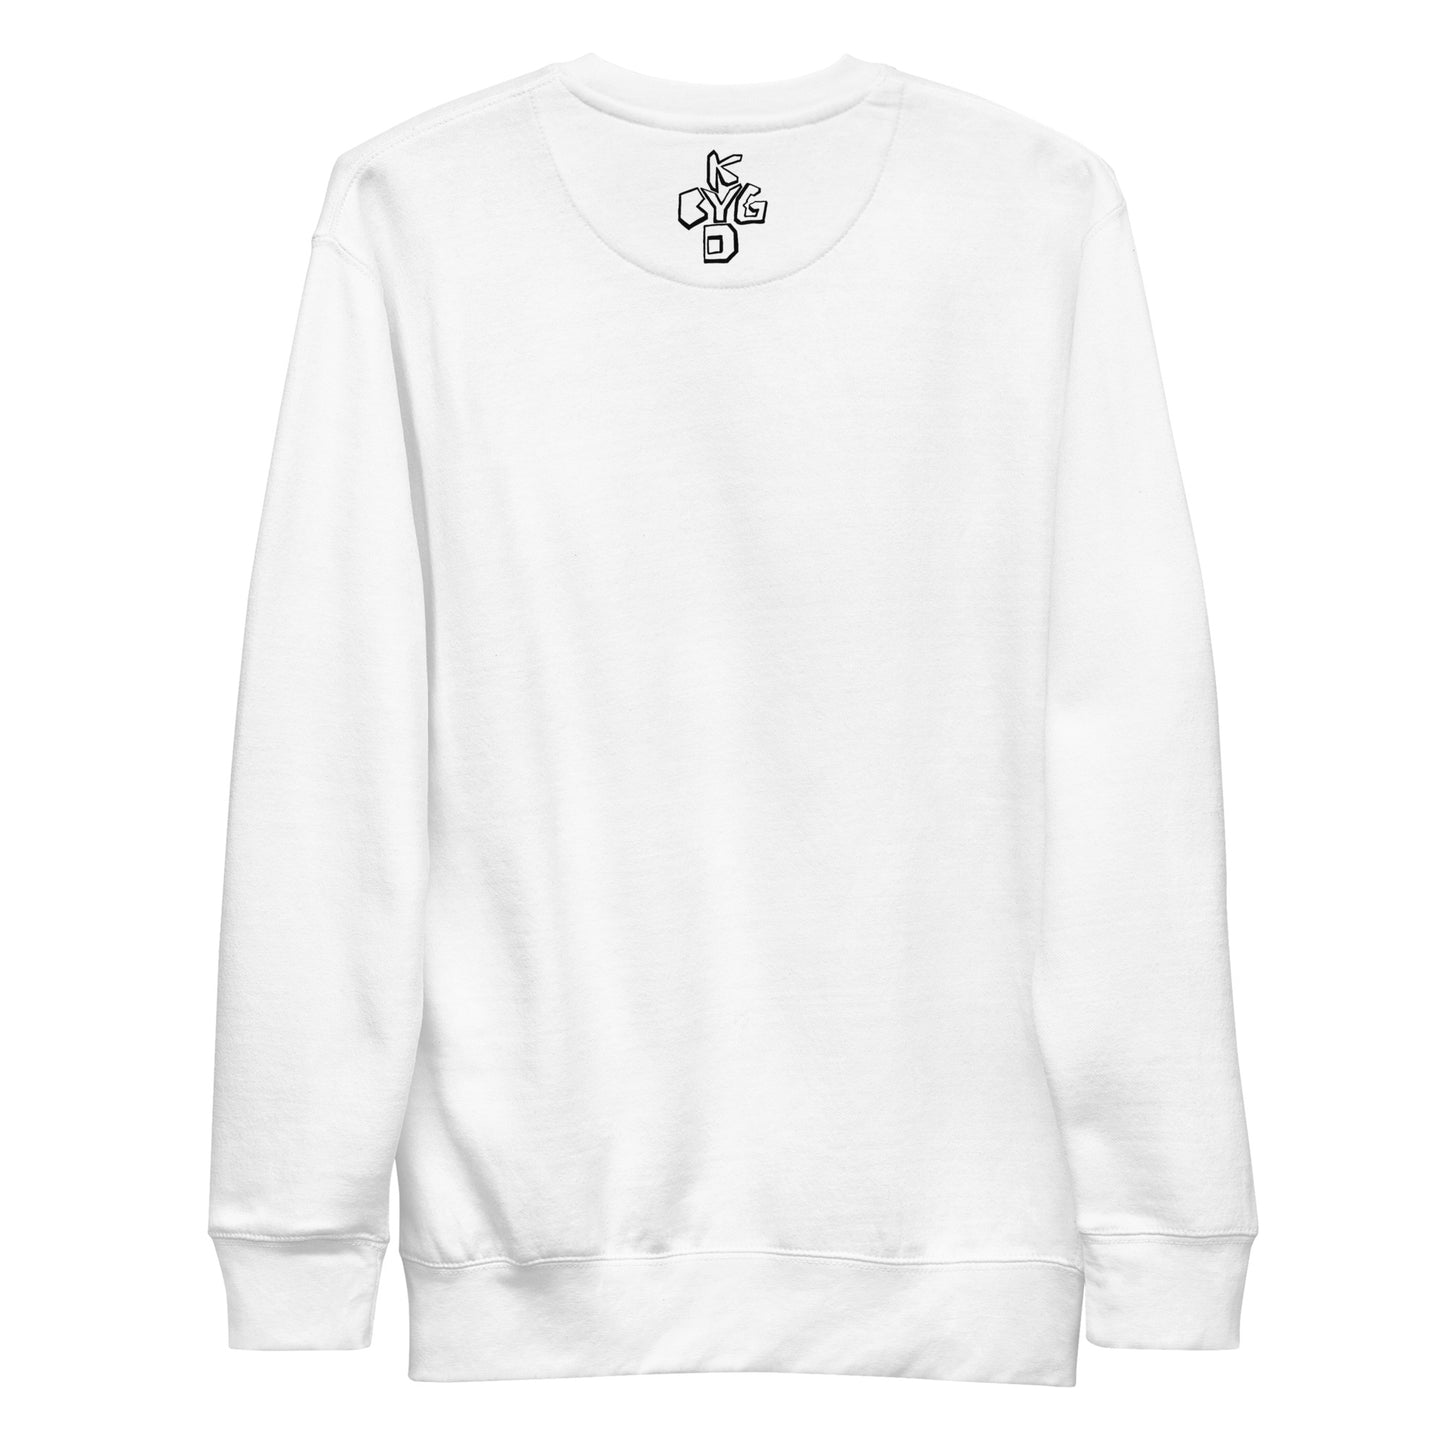 Culture/V4a - Unisex Premium Sweatshirt (S-3XL)